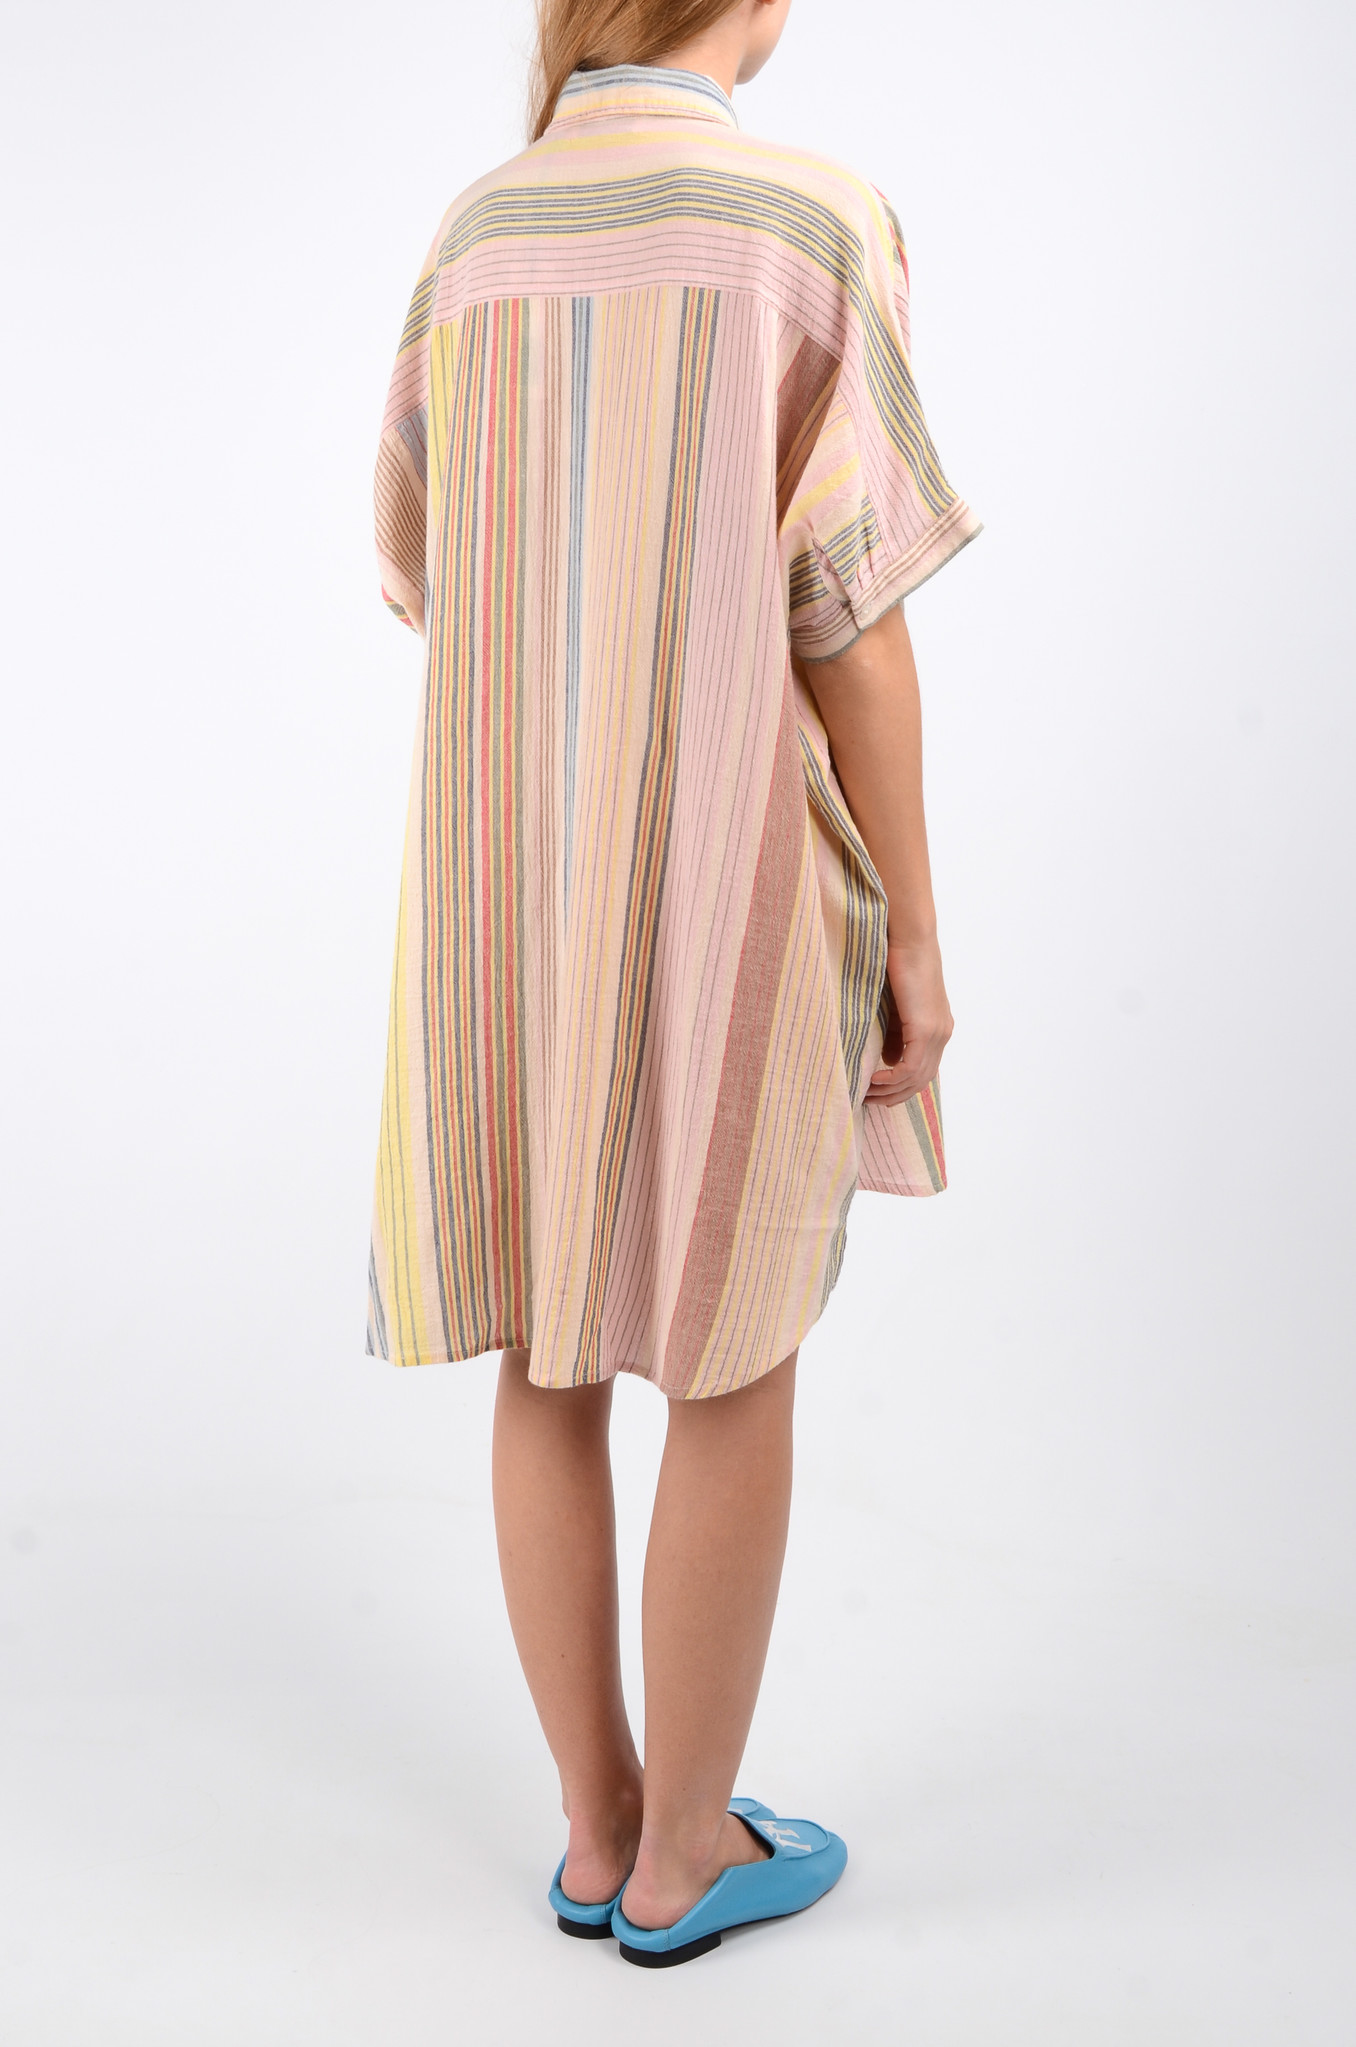 Cassia Dress in Multi Stripes-5